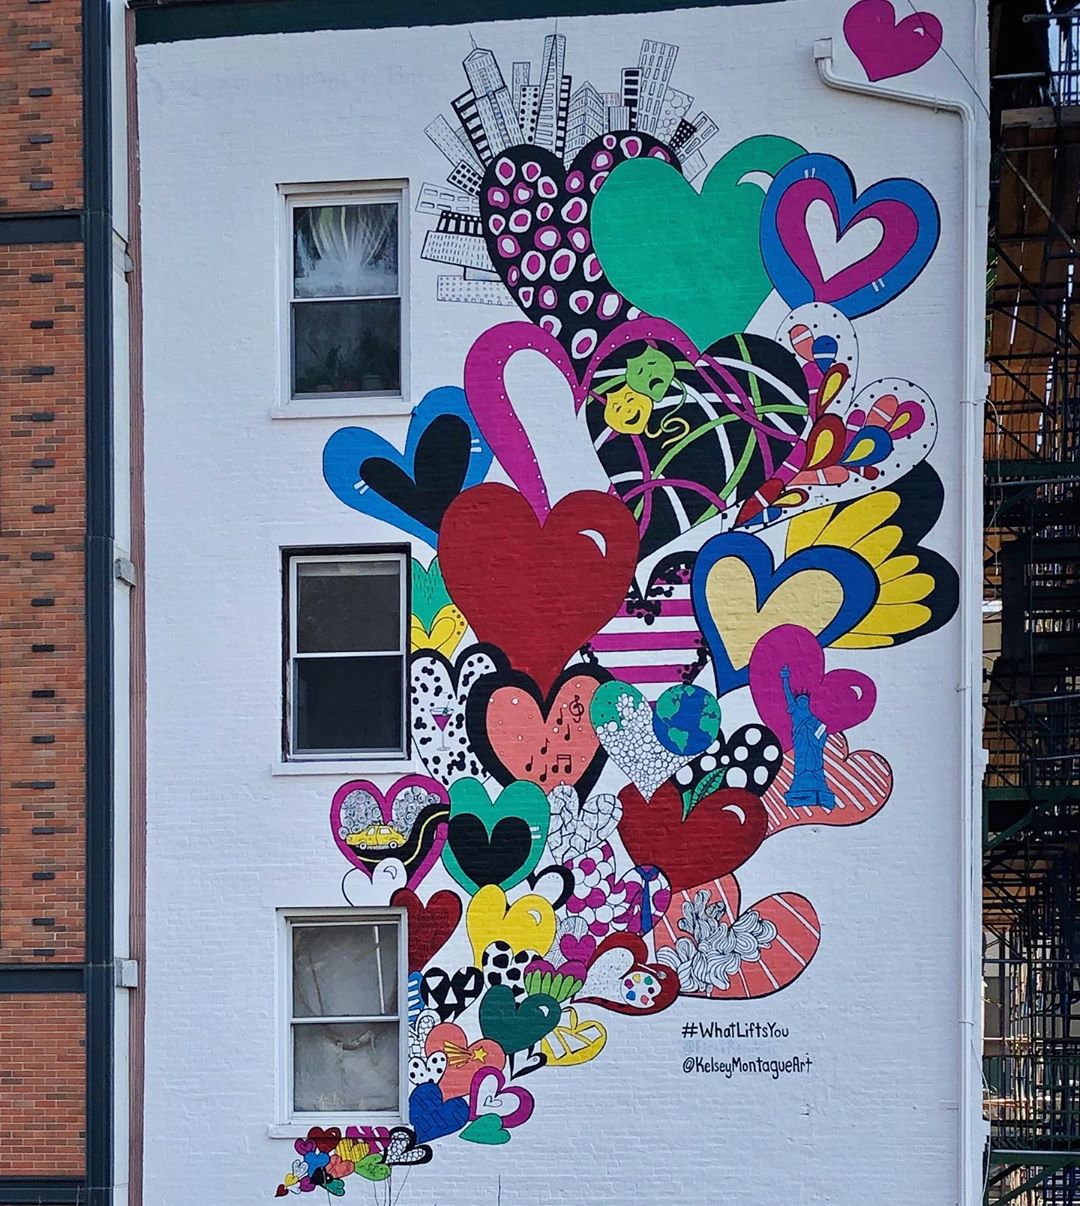 mural in New York by artist Kelsey Montague.